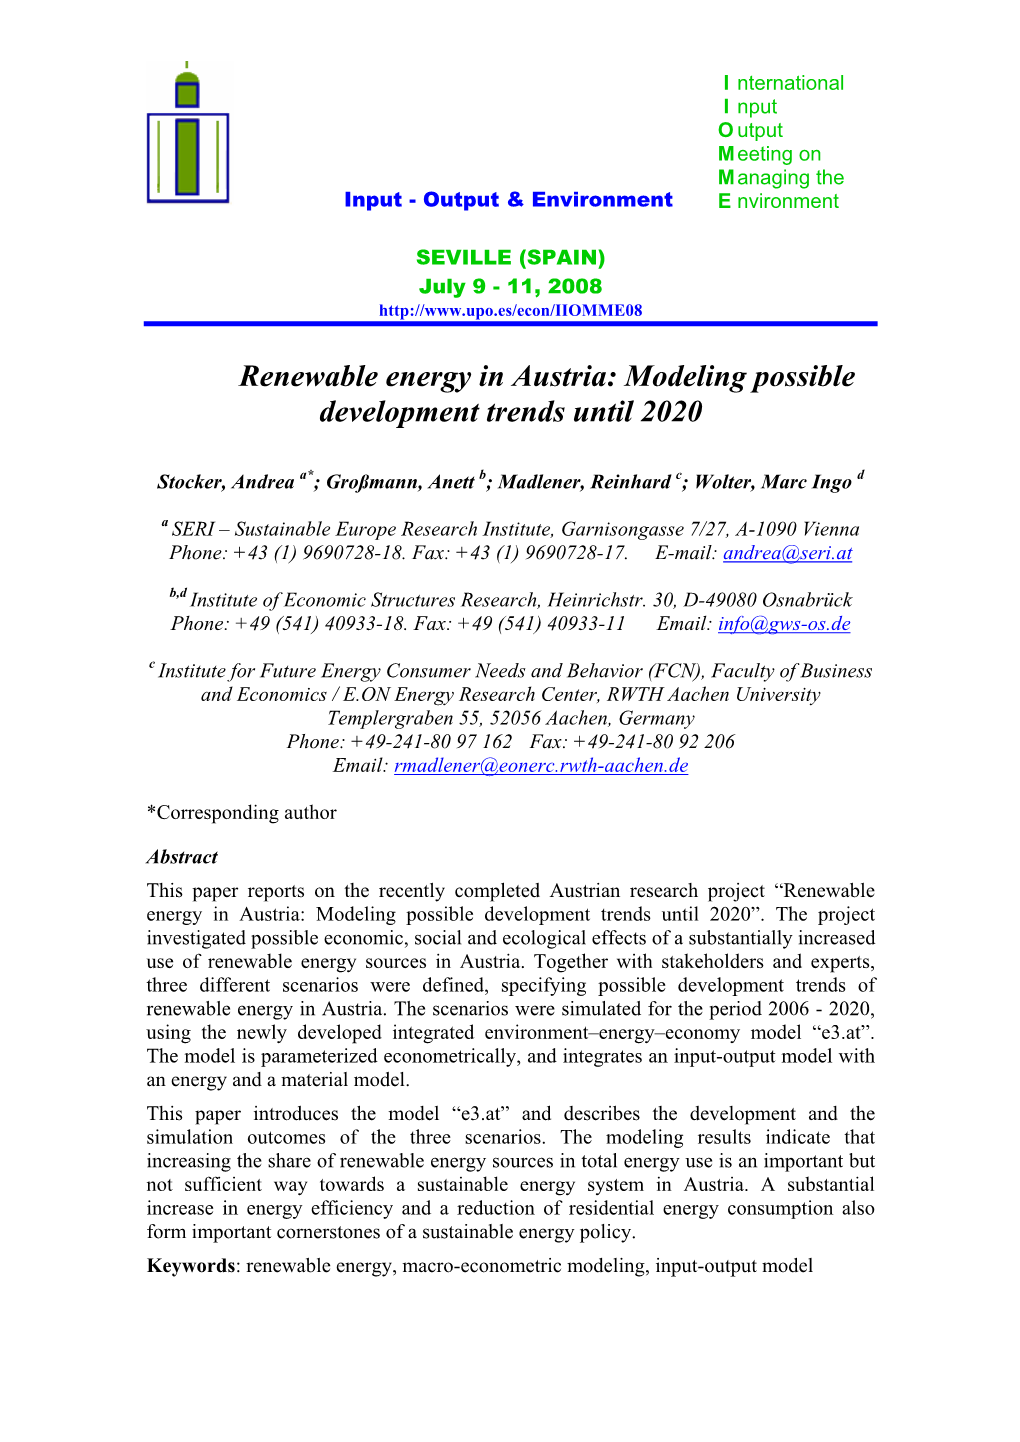 Renewable Energy in Austria: Modeling Possible Development Trends Until 2020